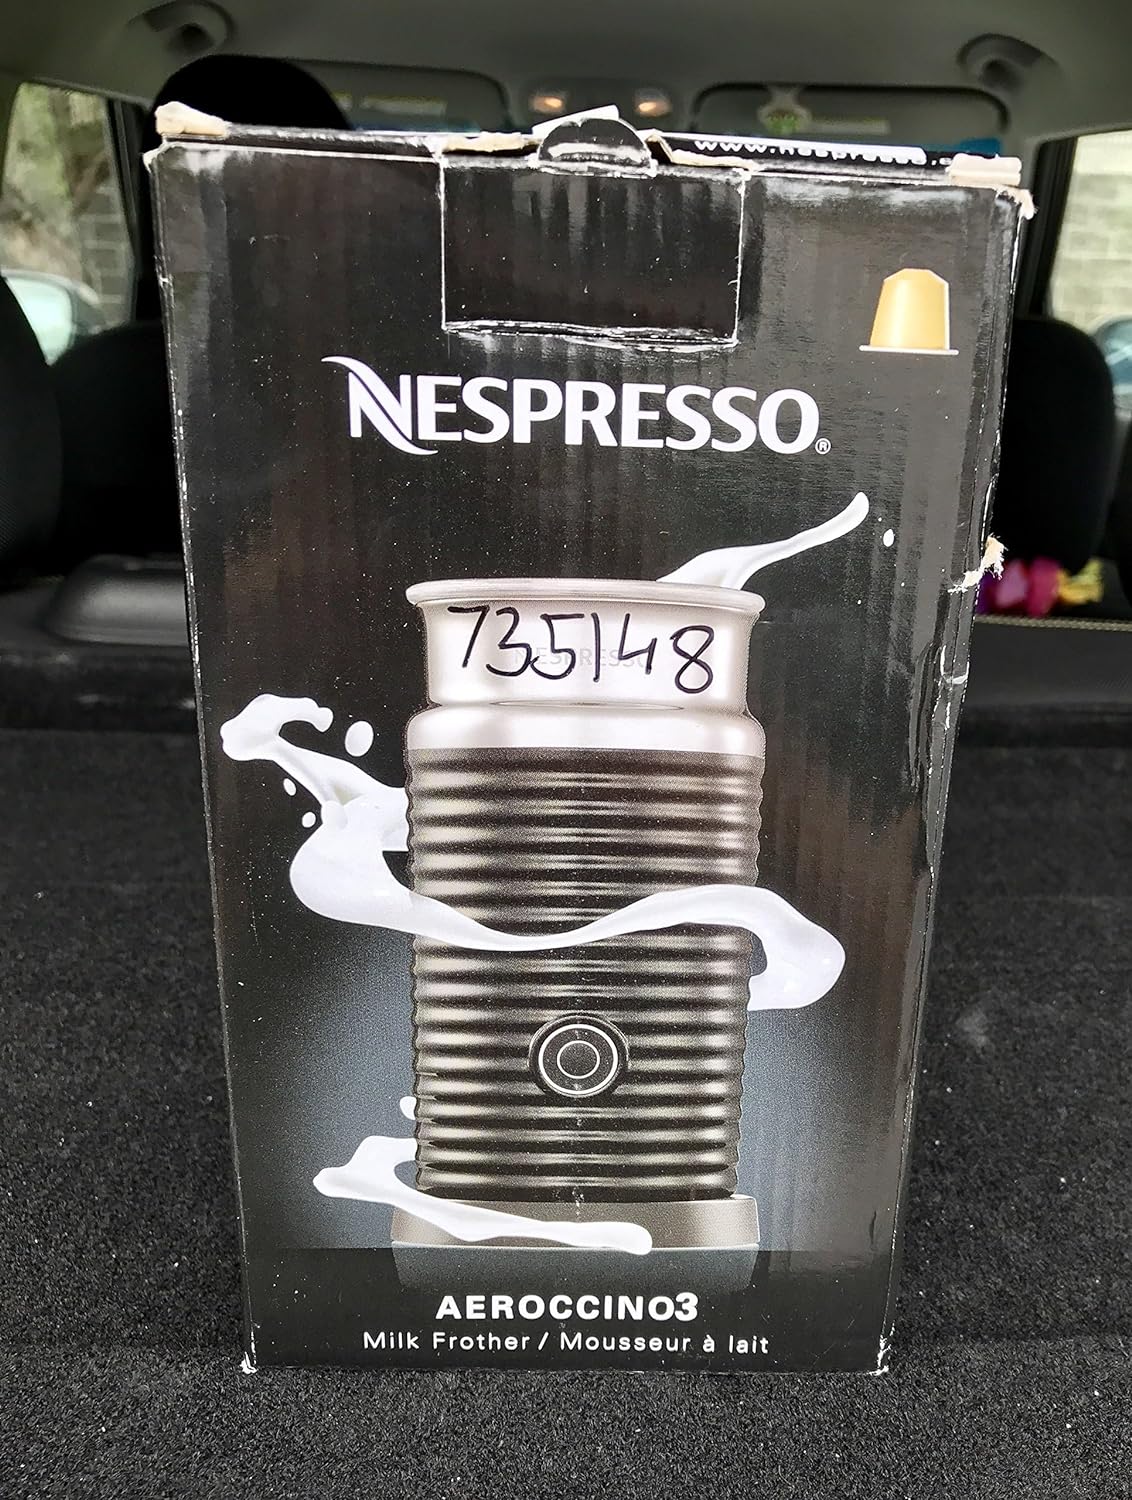 Nestle Nespresso Aeroccino3 3594 Black Milk Frother